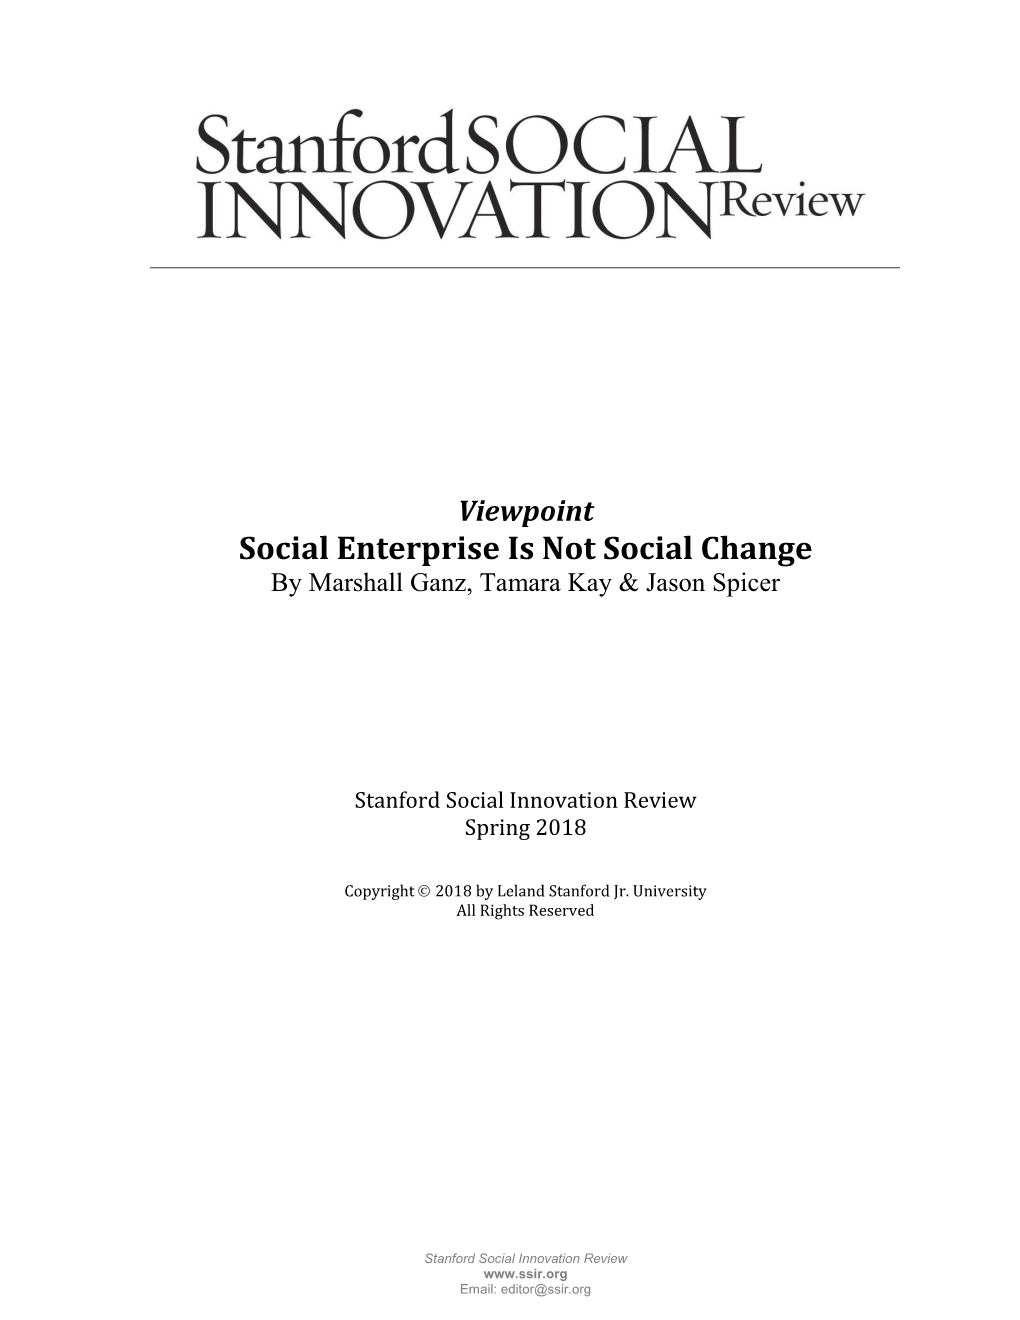 Social Enterprise Is Not Social Change by Marshall Ganz, Tamara Kay & Jason Spicer